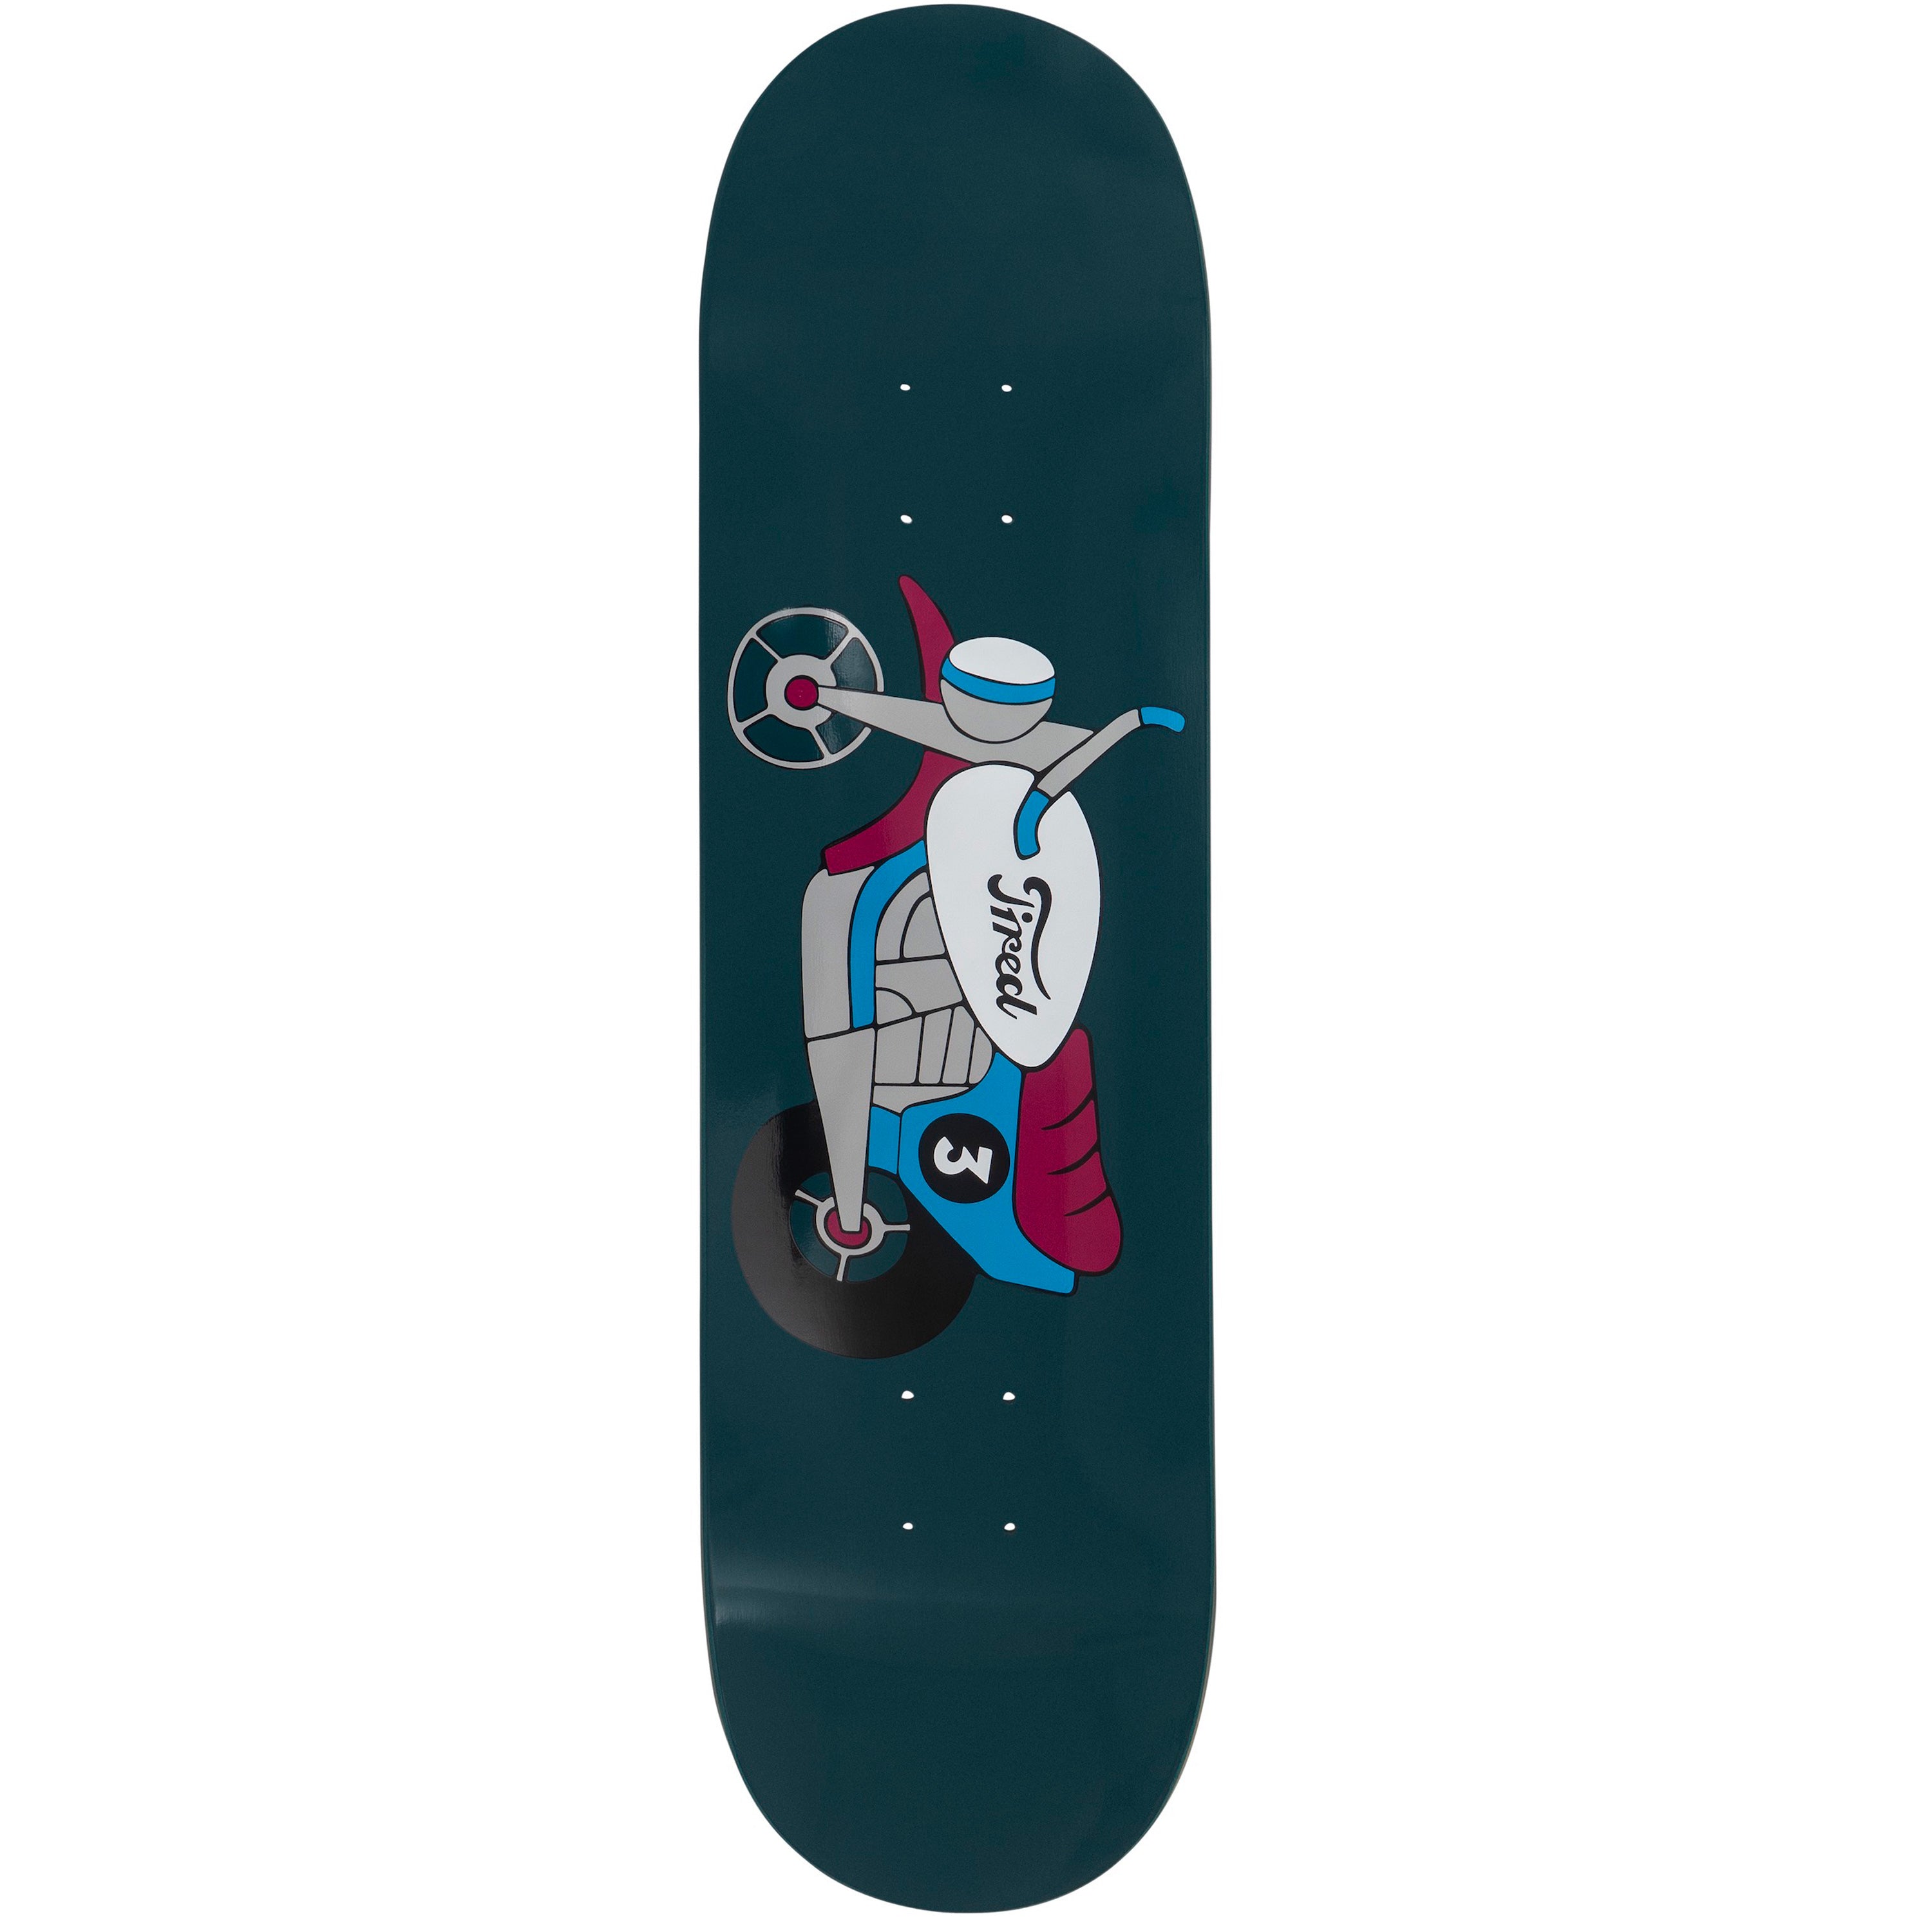 Tired Skateboards Moto Sports Deck - 8.25"